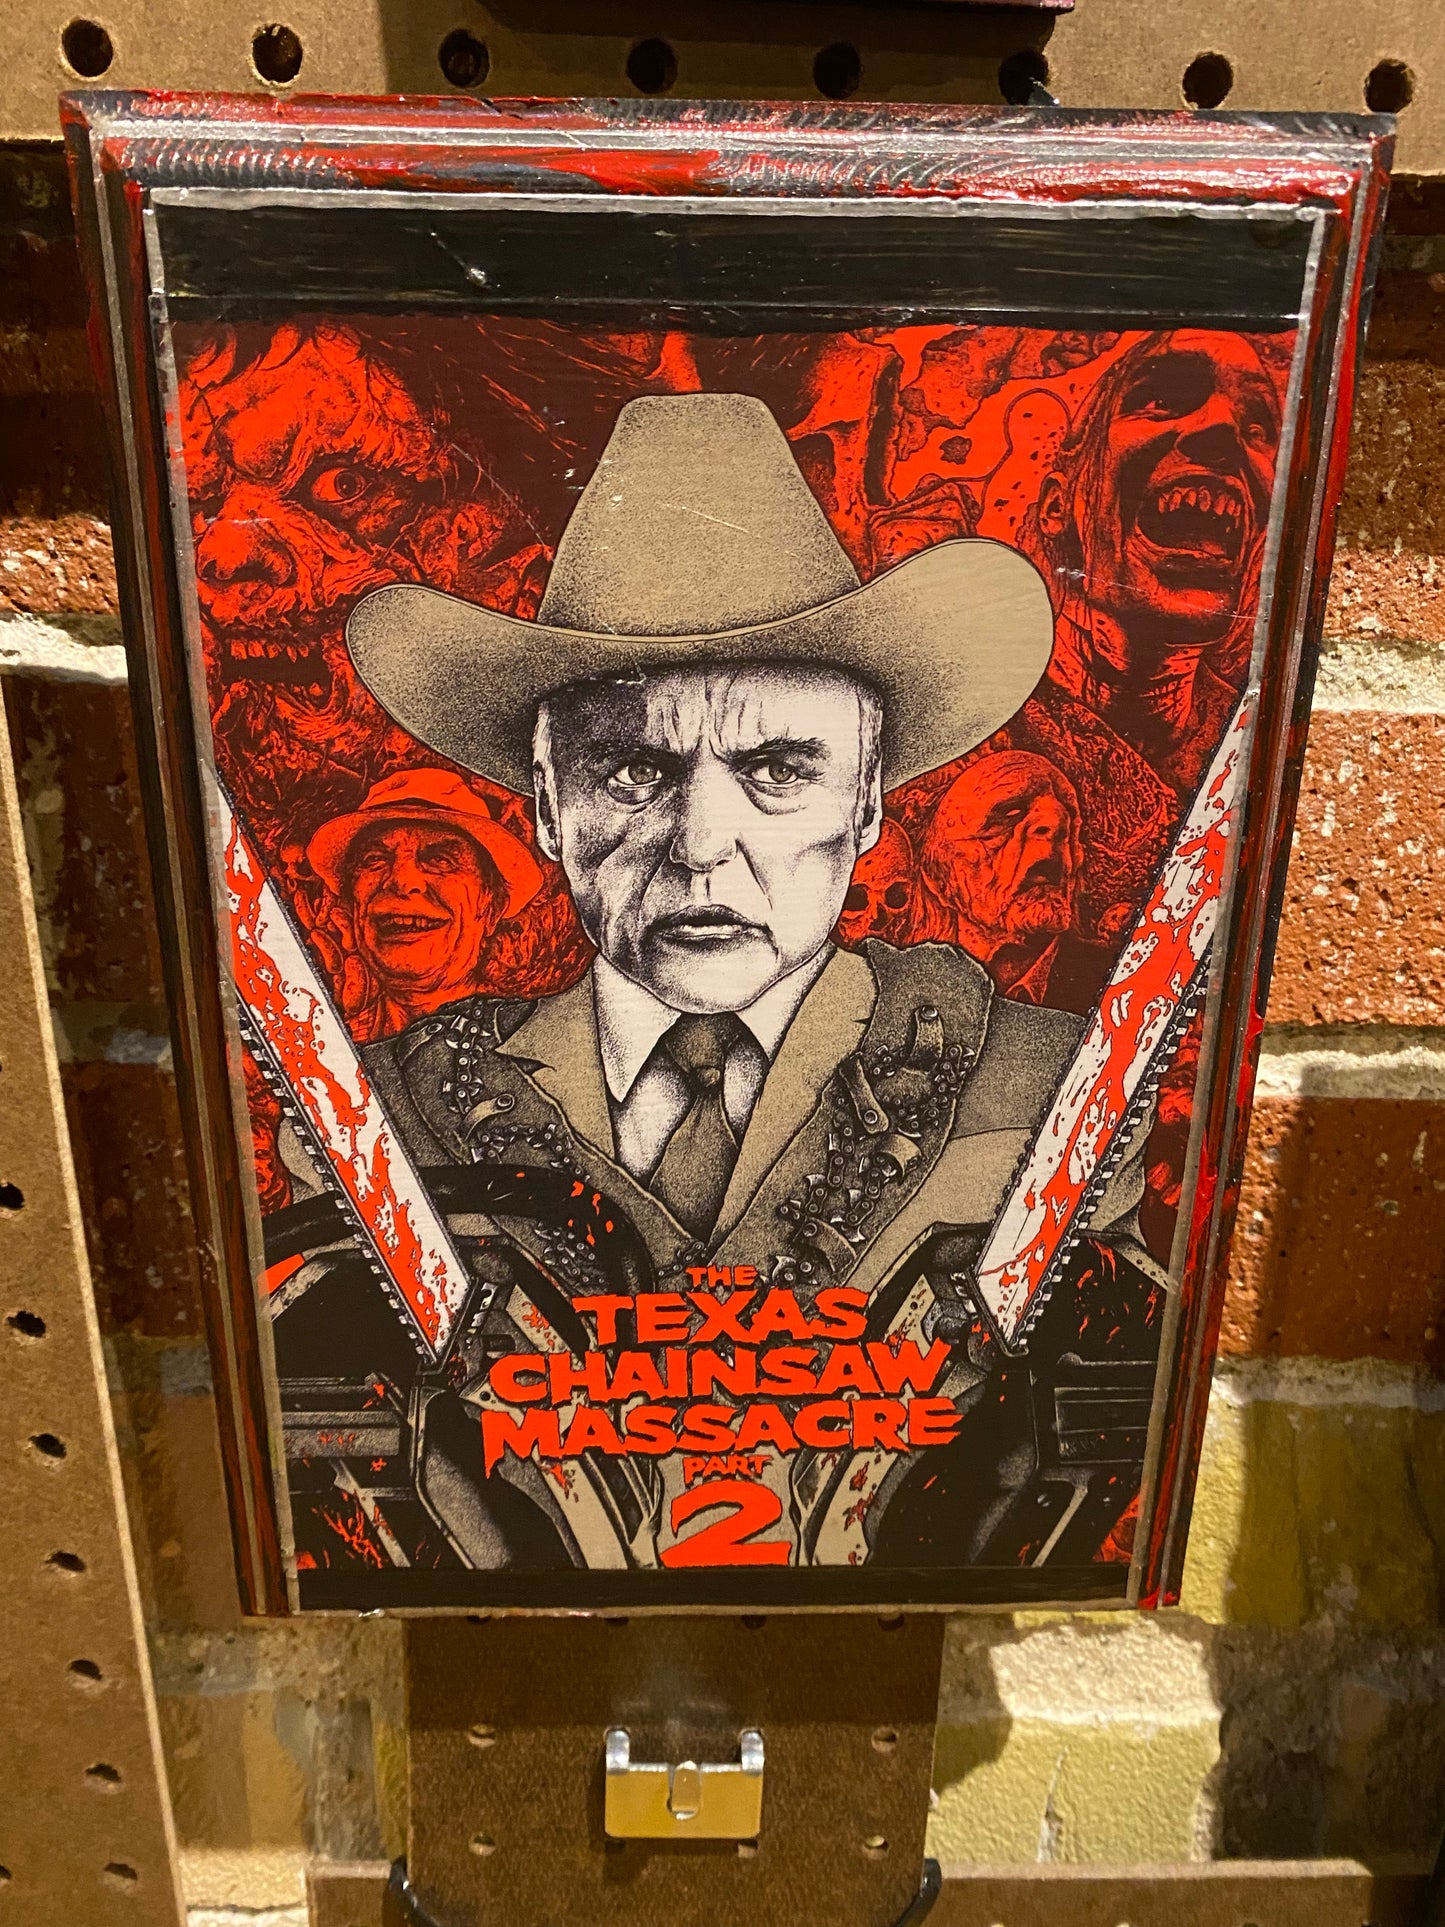 SALE: Half off Texas Chainsaw Massacre 2 Handmade Wood Art Plaque 9x7